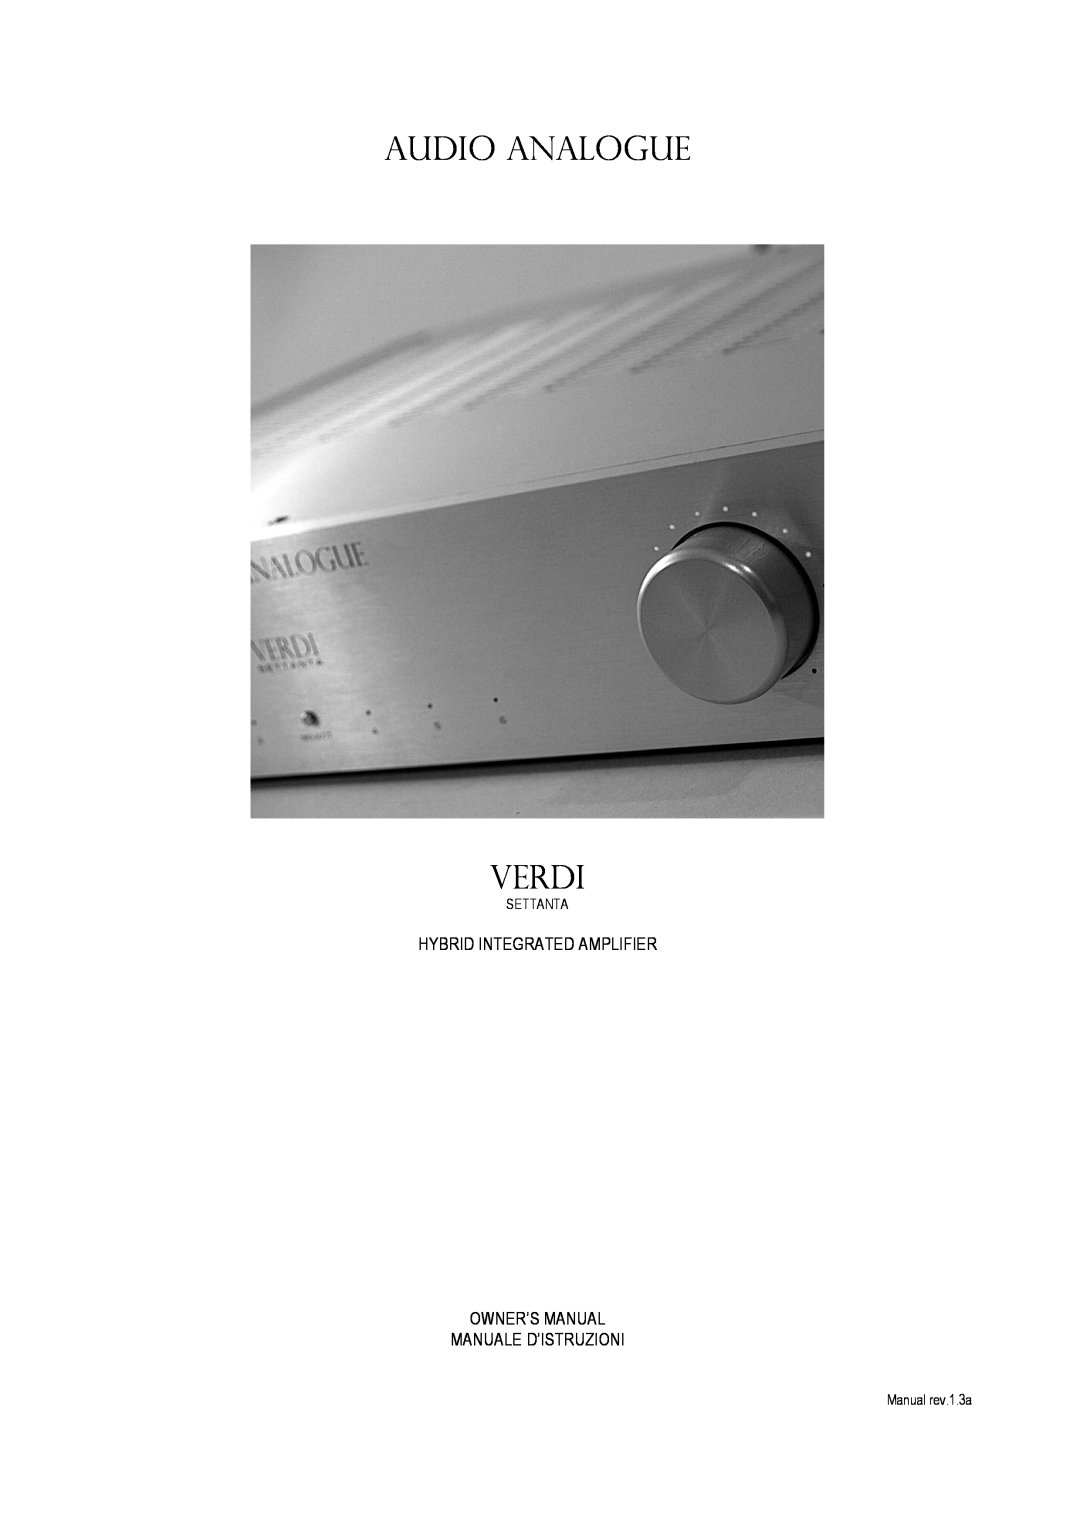 Audio Analogue SRL Hybrid Integrated Amplifier owner manual Verdi, Audio Analogue, Settanta, Manual rev.1.3a 